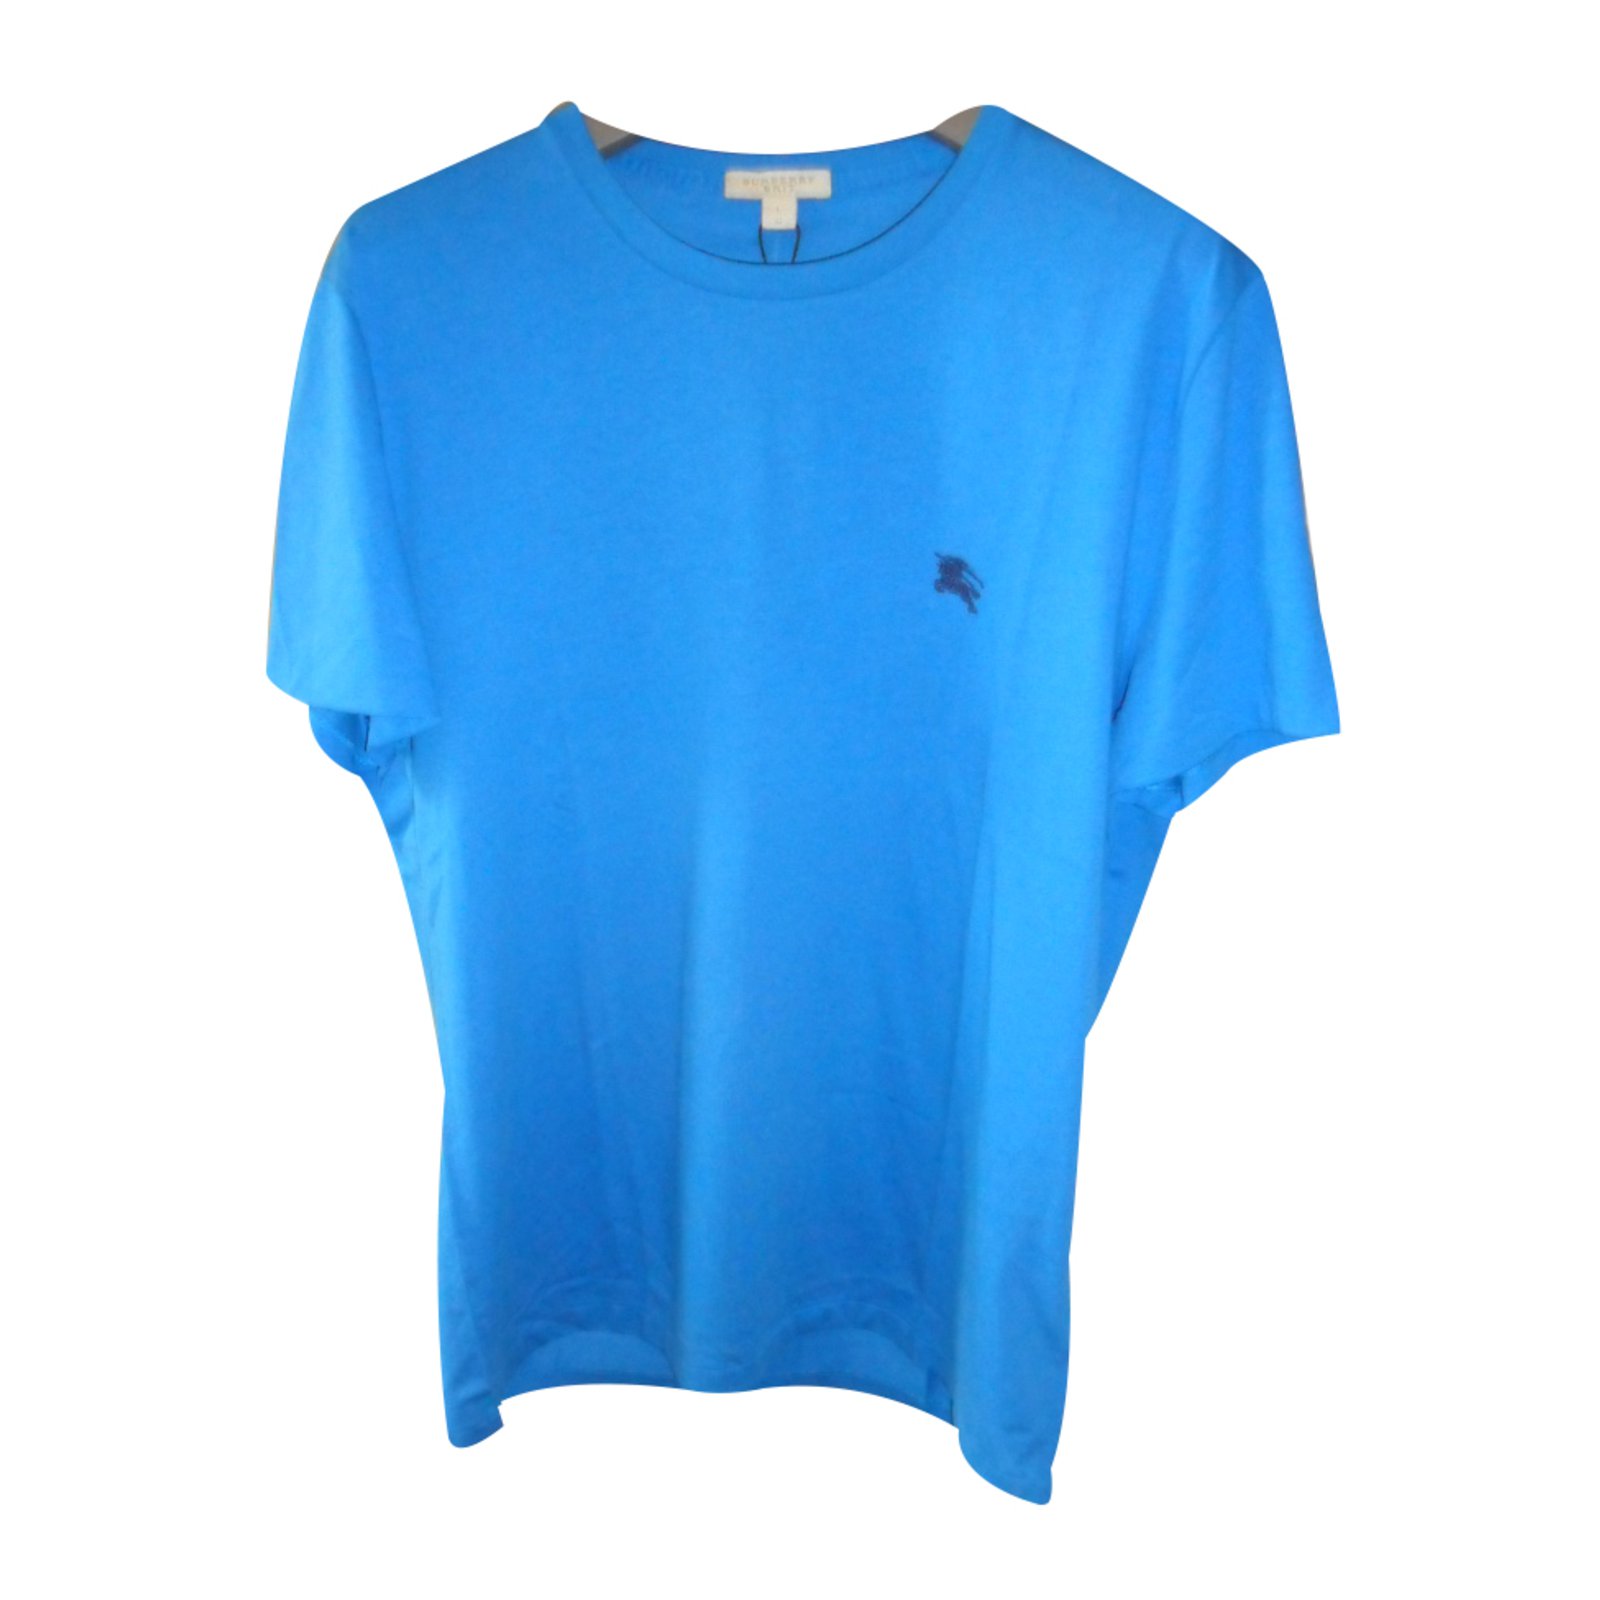 burberry t shirt blue